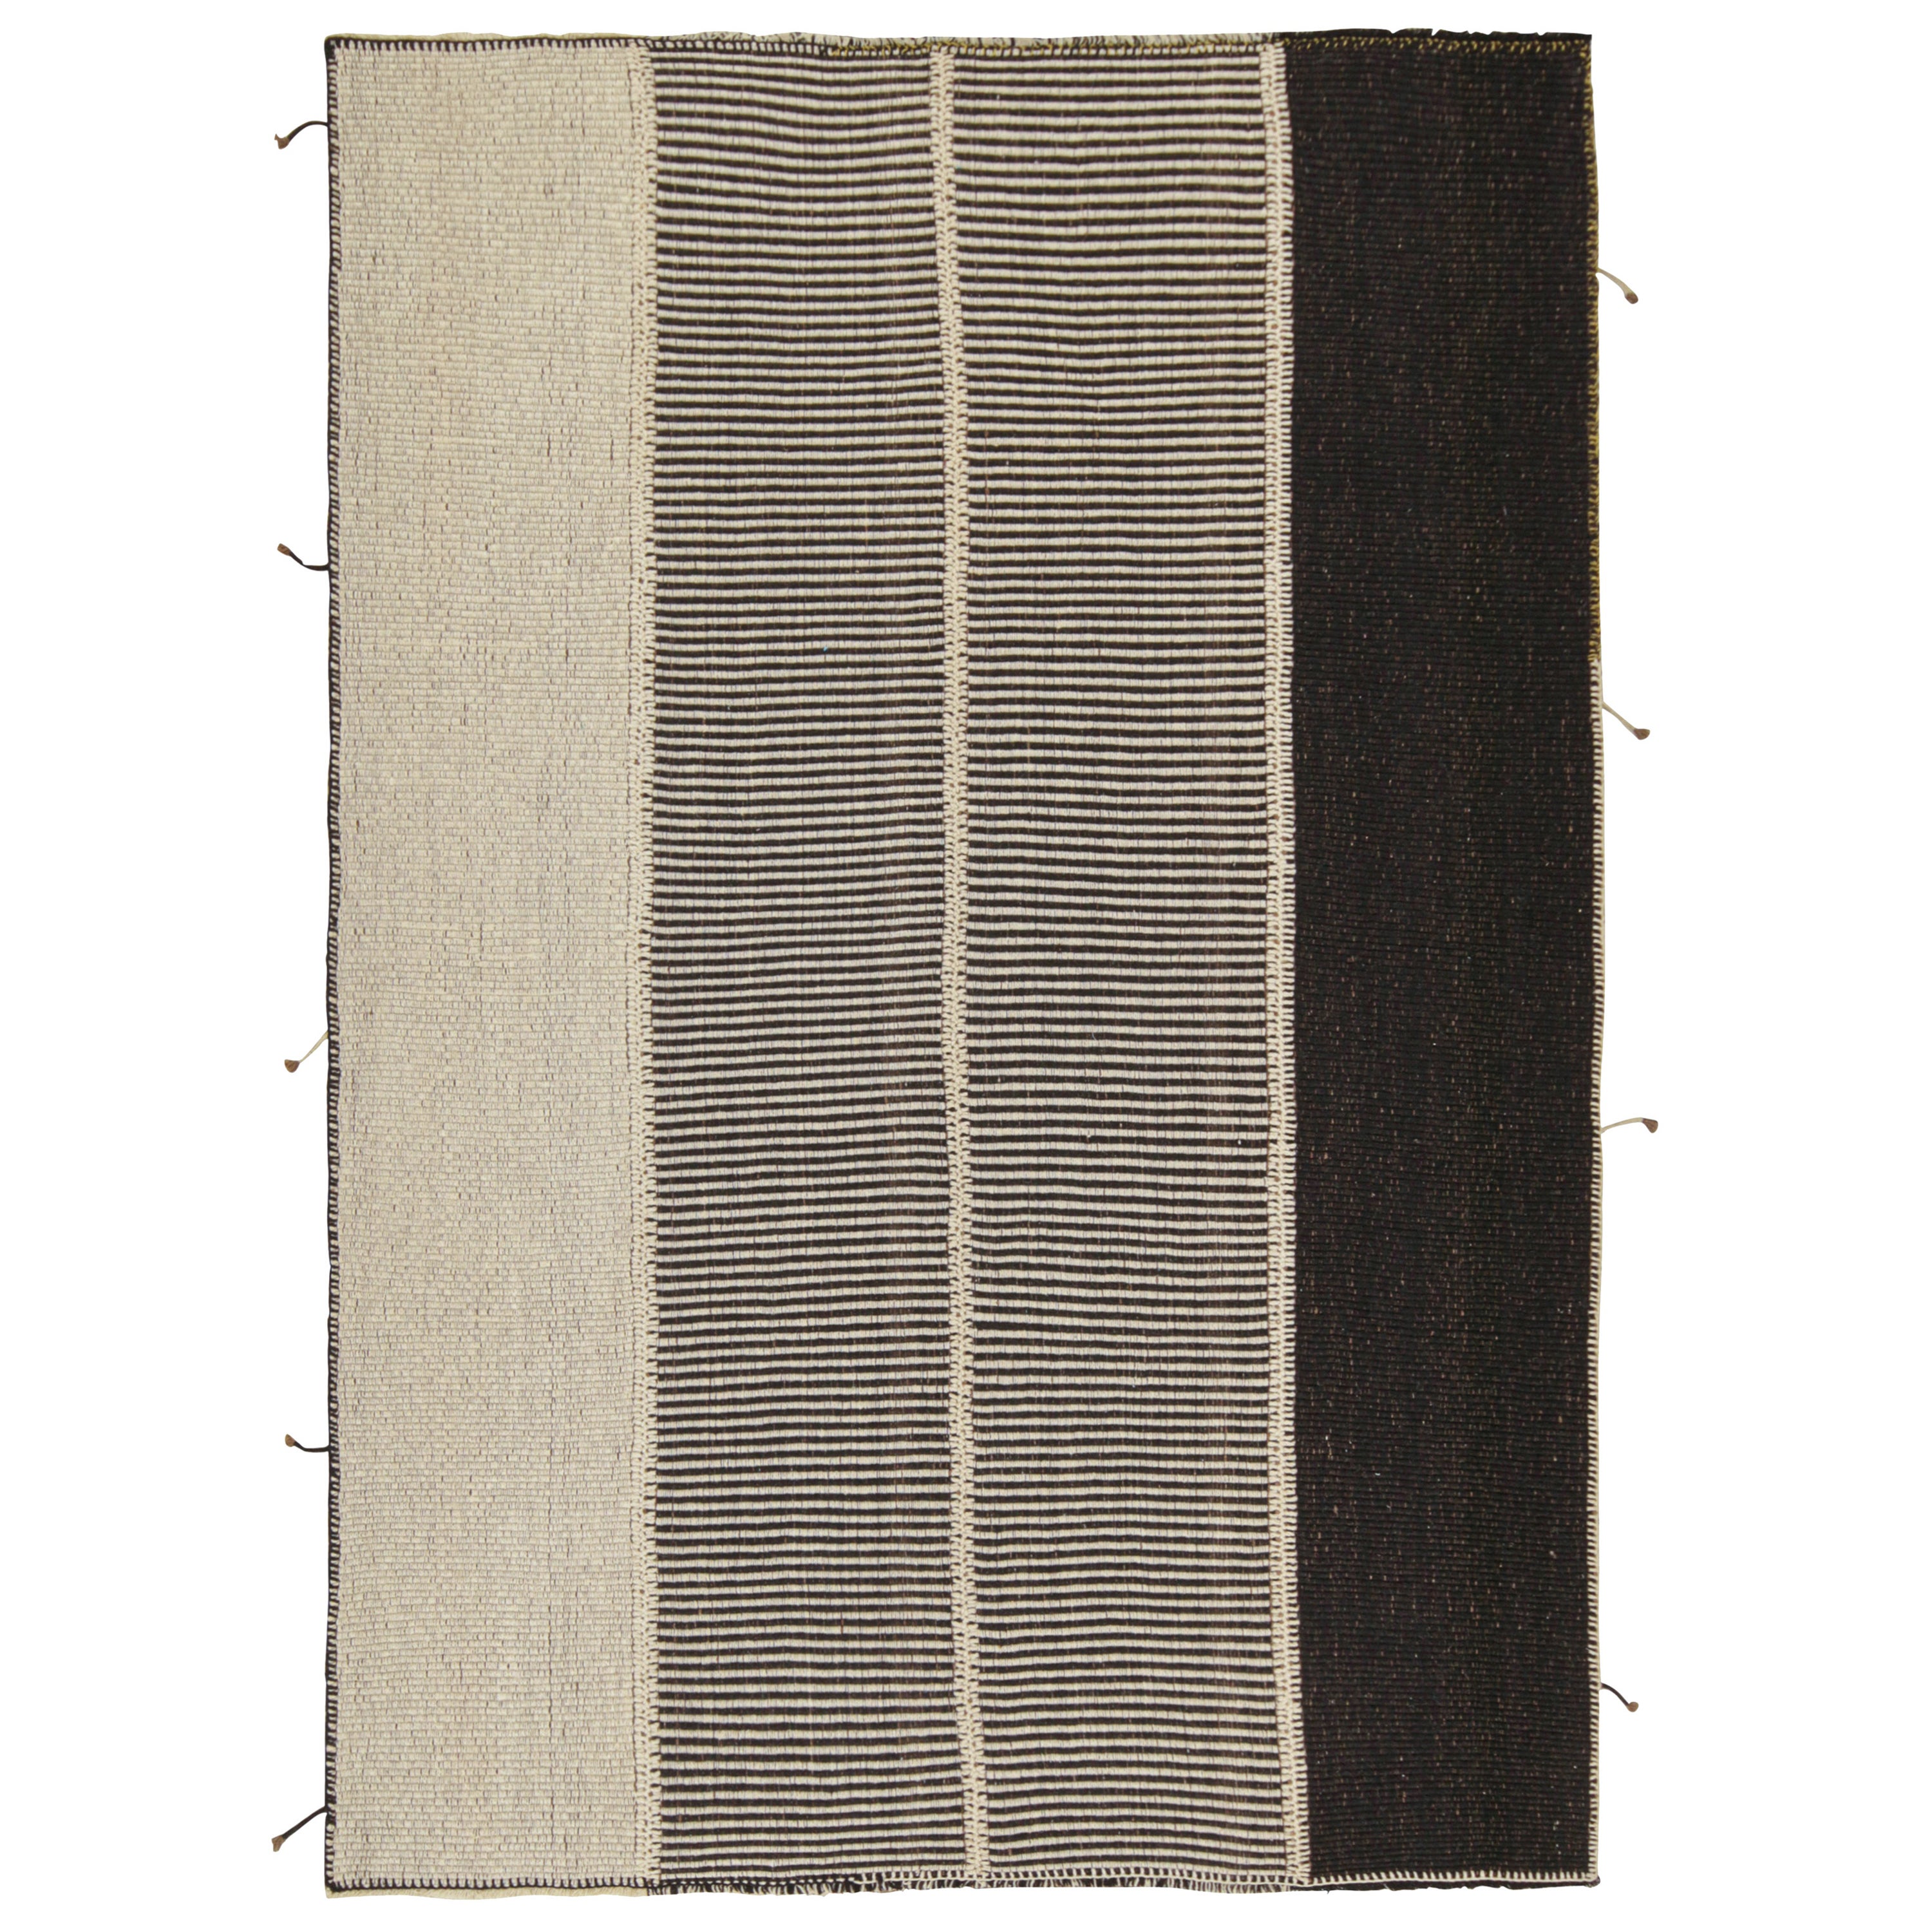 Rug & Kilim’s Custom Kilim Design with Beige-Brown, Black and Off-White Stripes For Sale